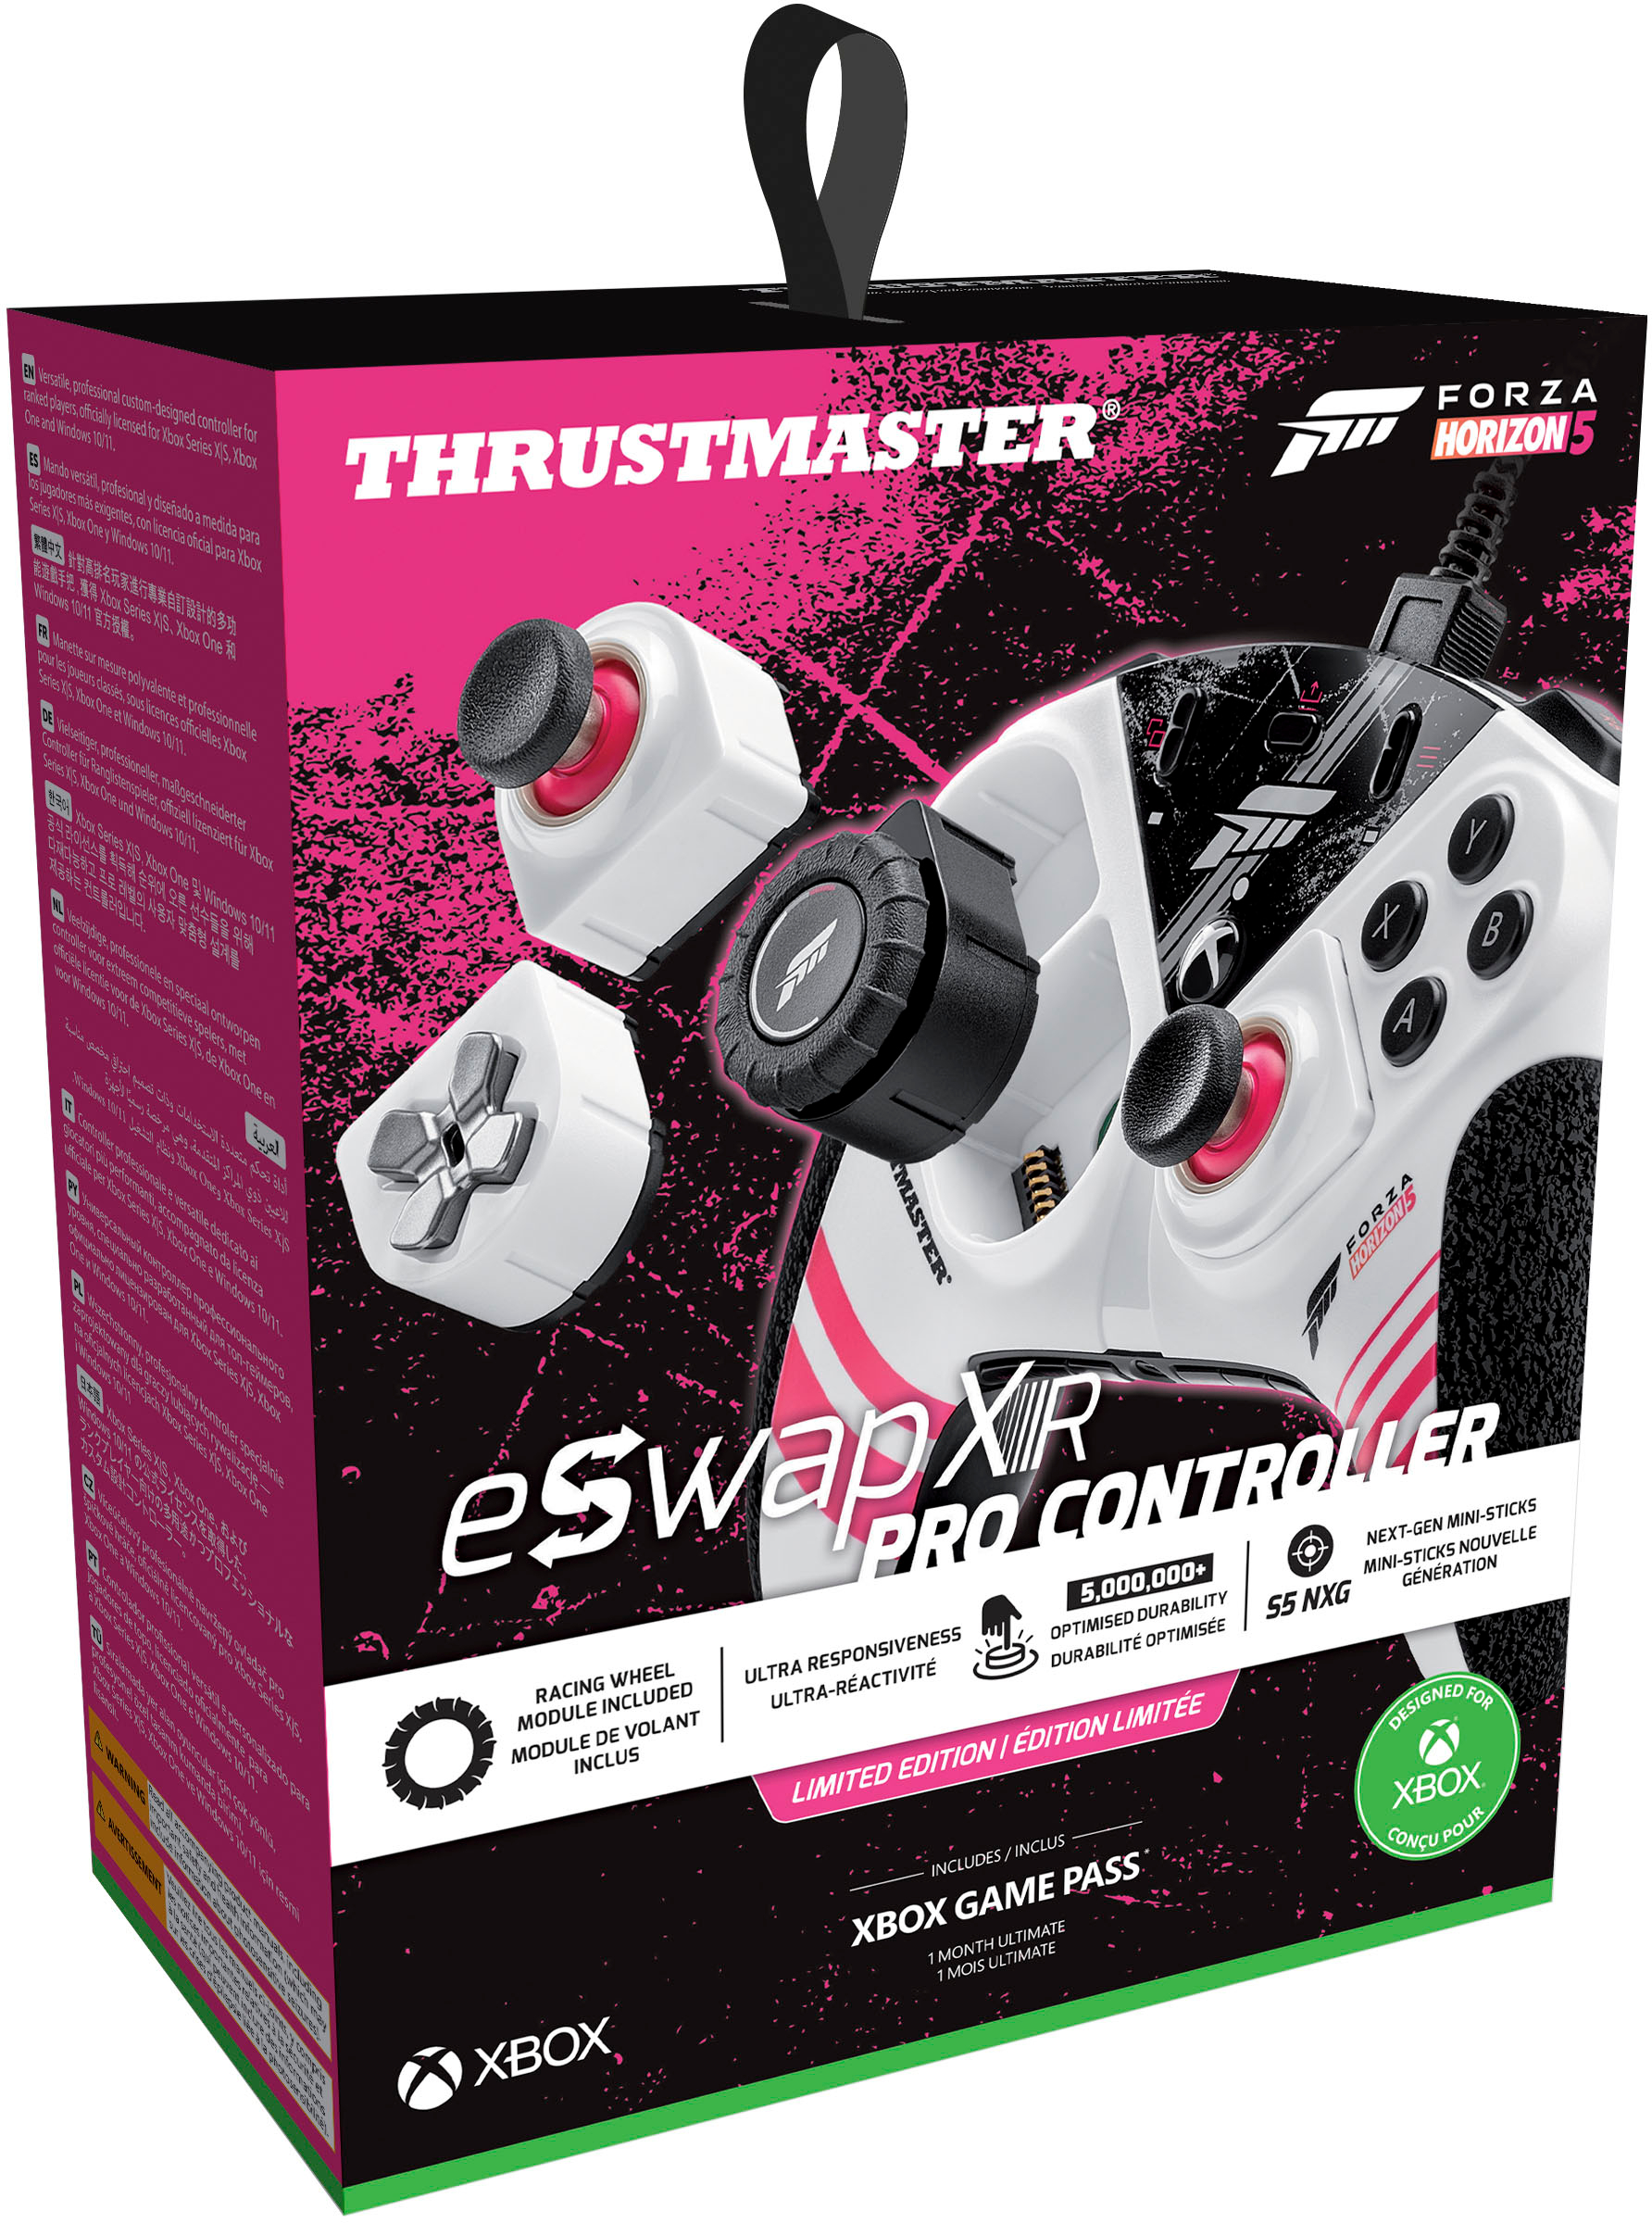 Thrustmaster eSwap X R Pro Controller Forza Horizon 5 Edition for Xbox One,  Xbox X